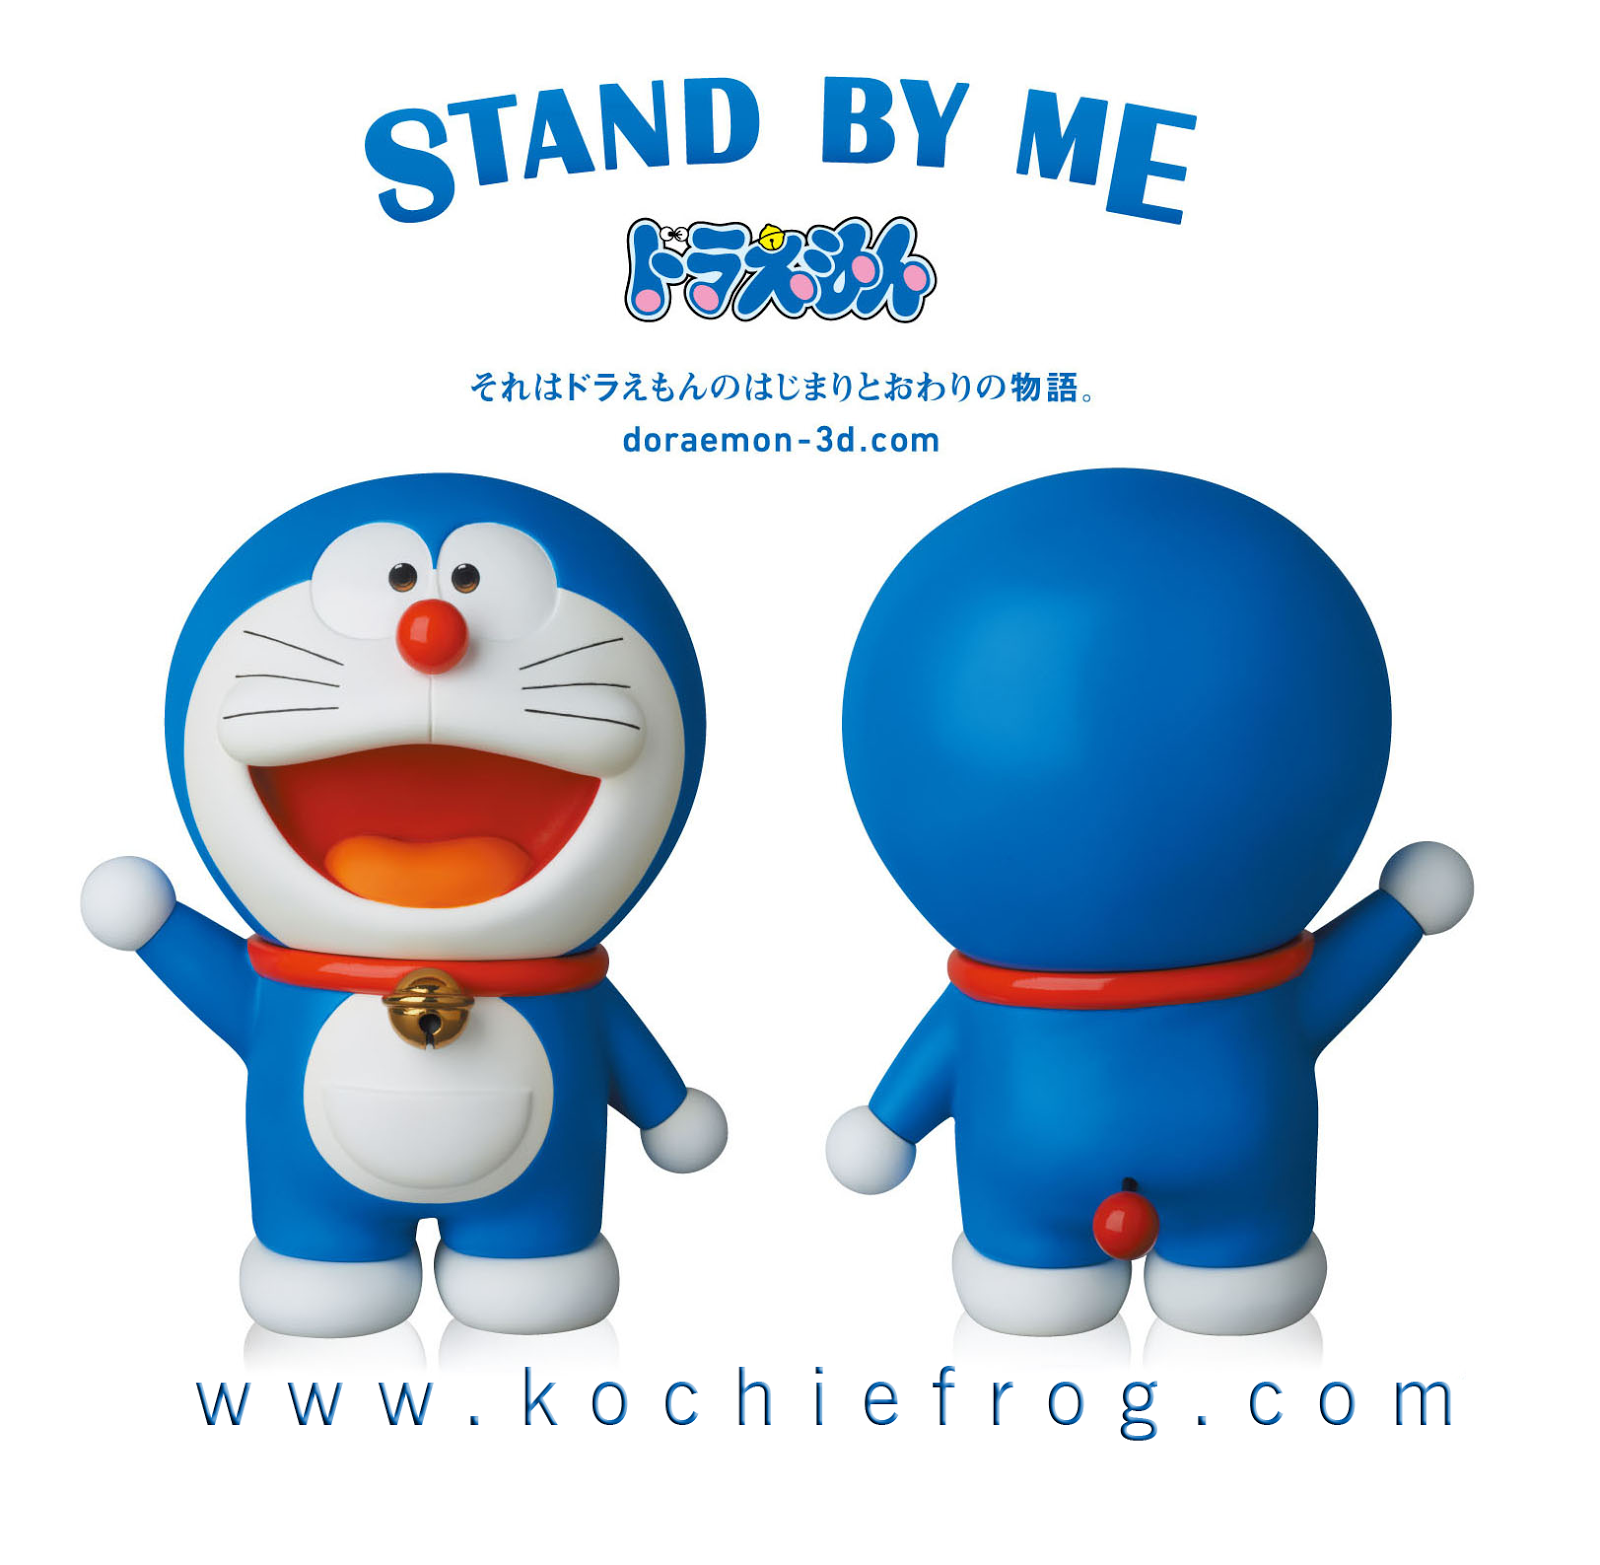 9300 Gambar Kata Kata Doraemon Terbaru